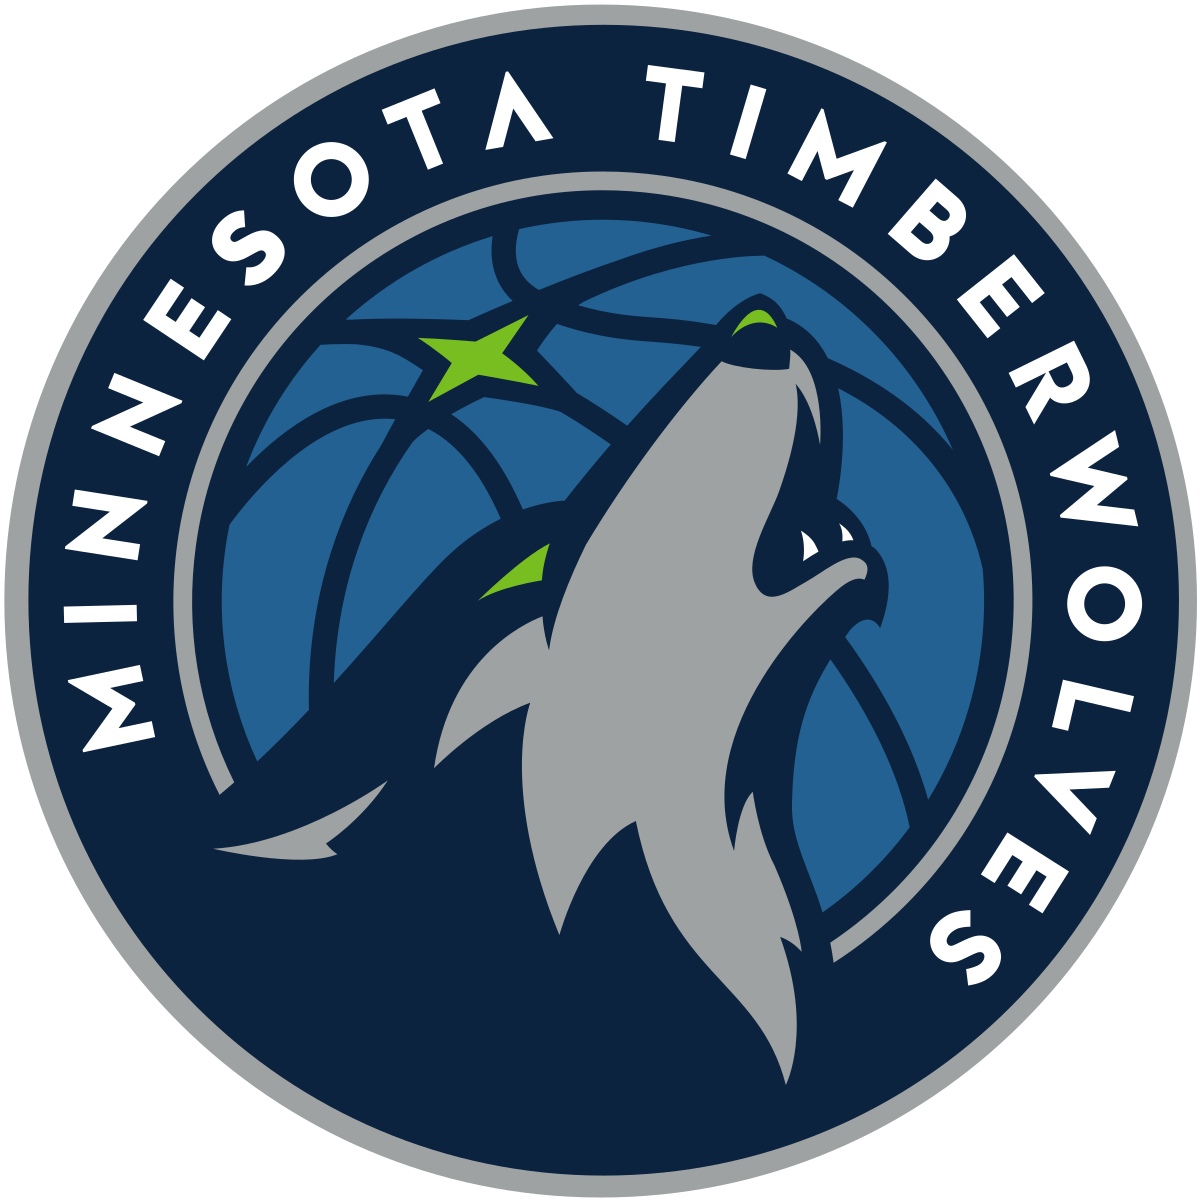 Minnesota Timberwolves Basketball